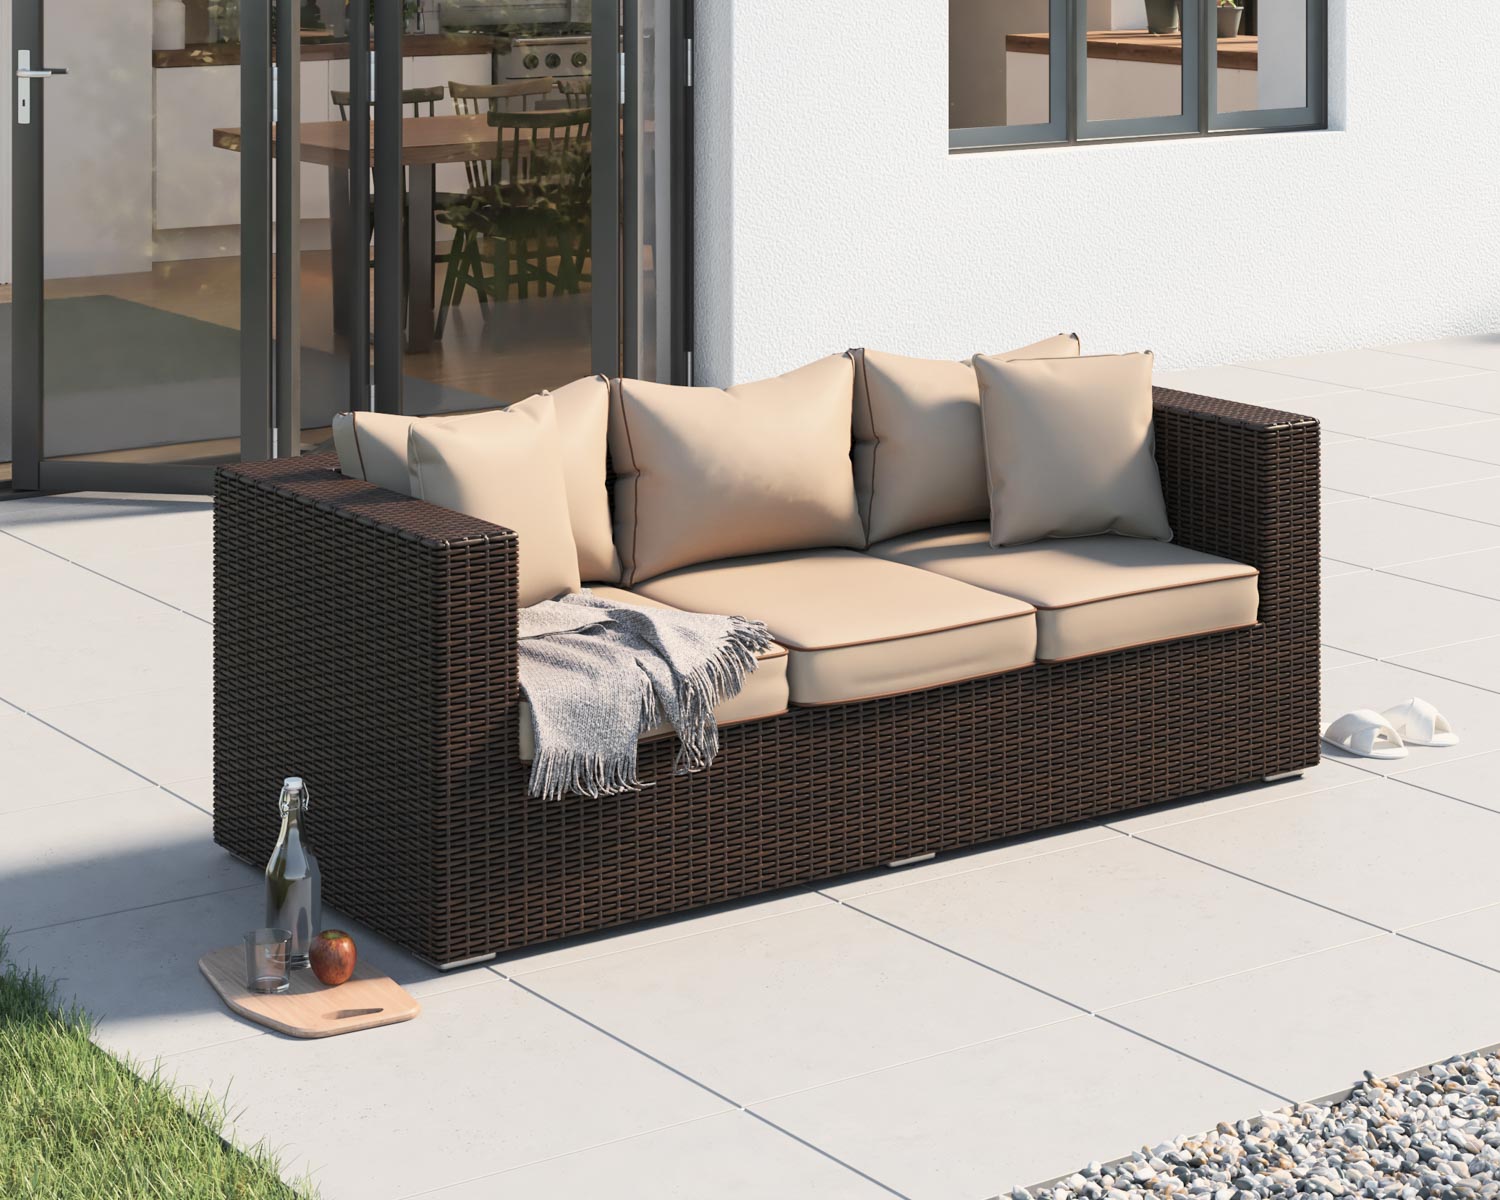 3 Seater Rattan Garden Sofa in Brown - Ascot - Rattan Direct